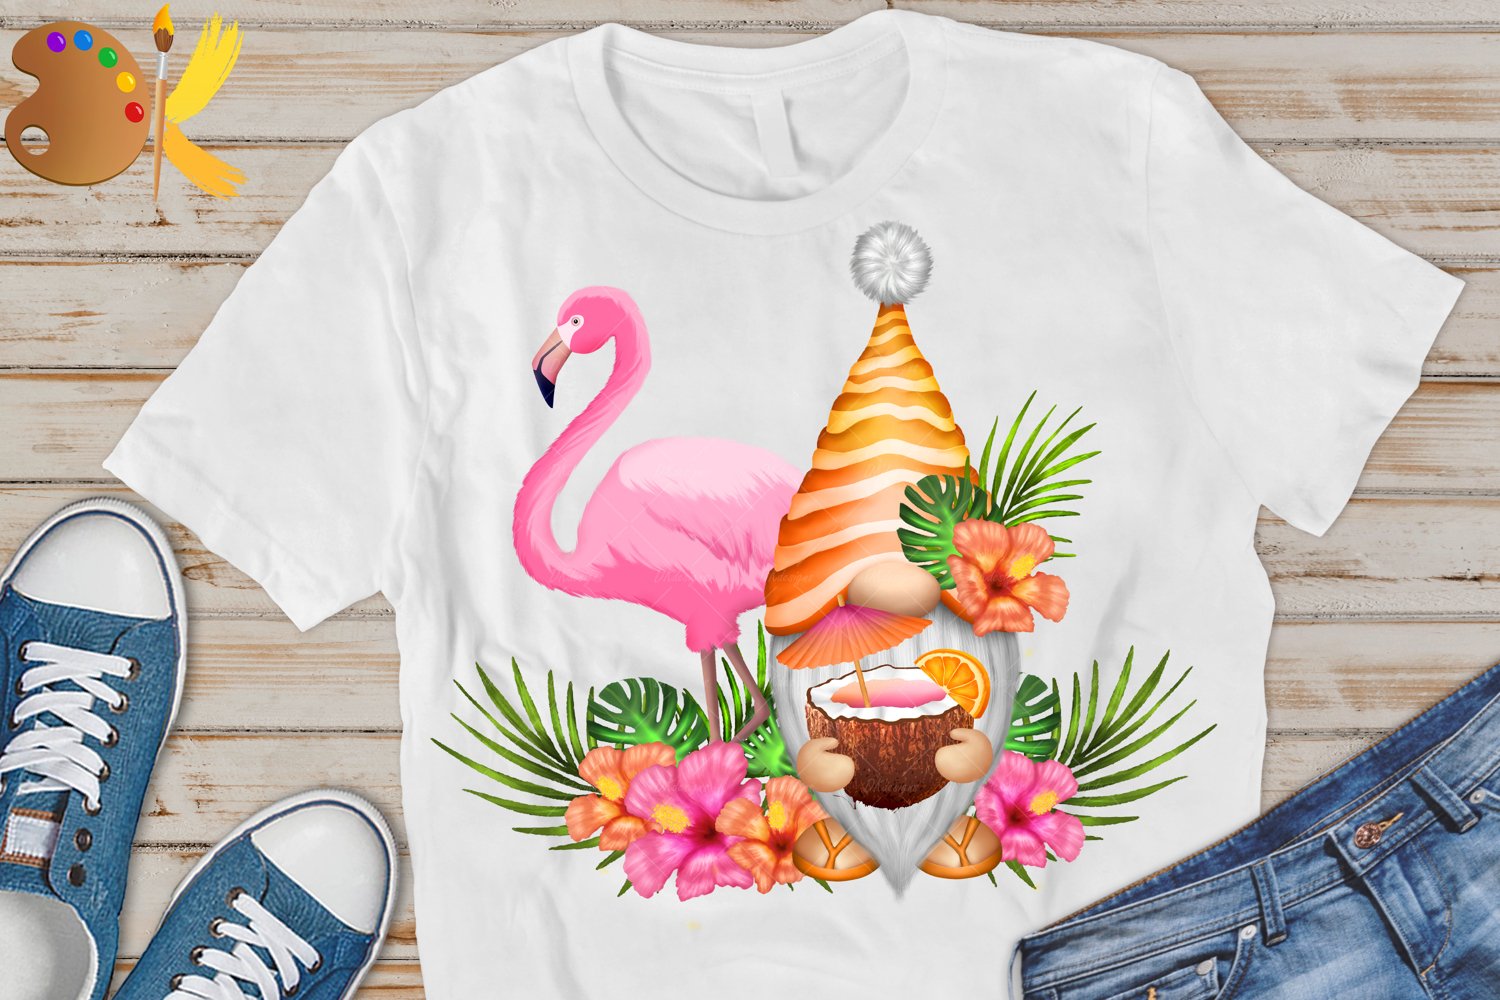 Tropical t-shirt design.